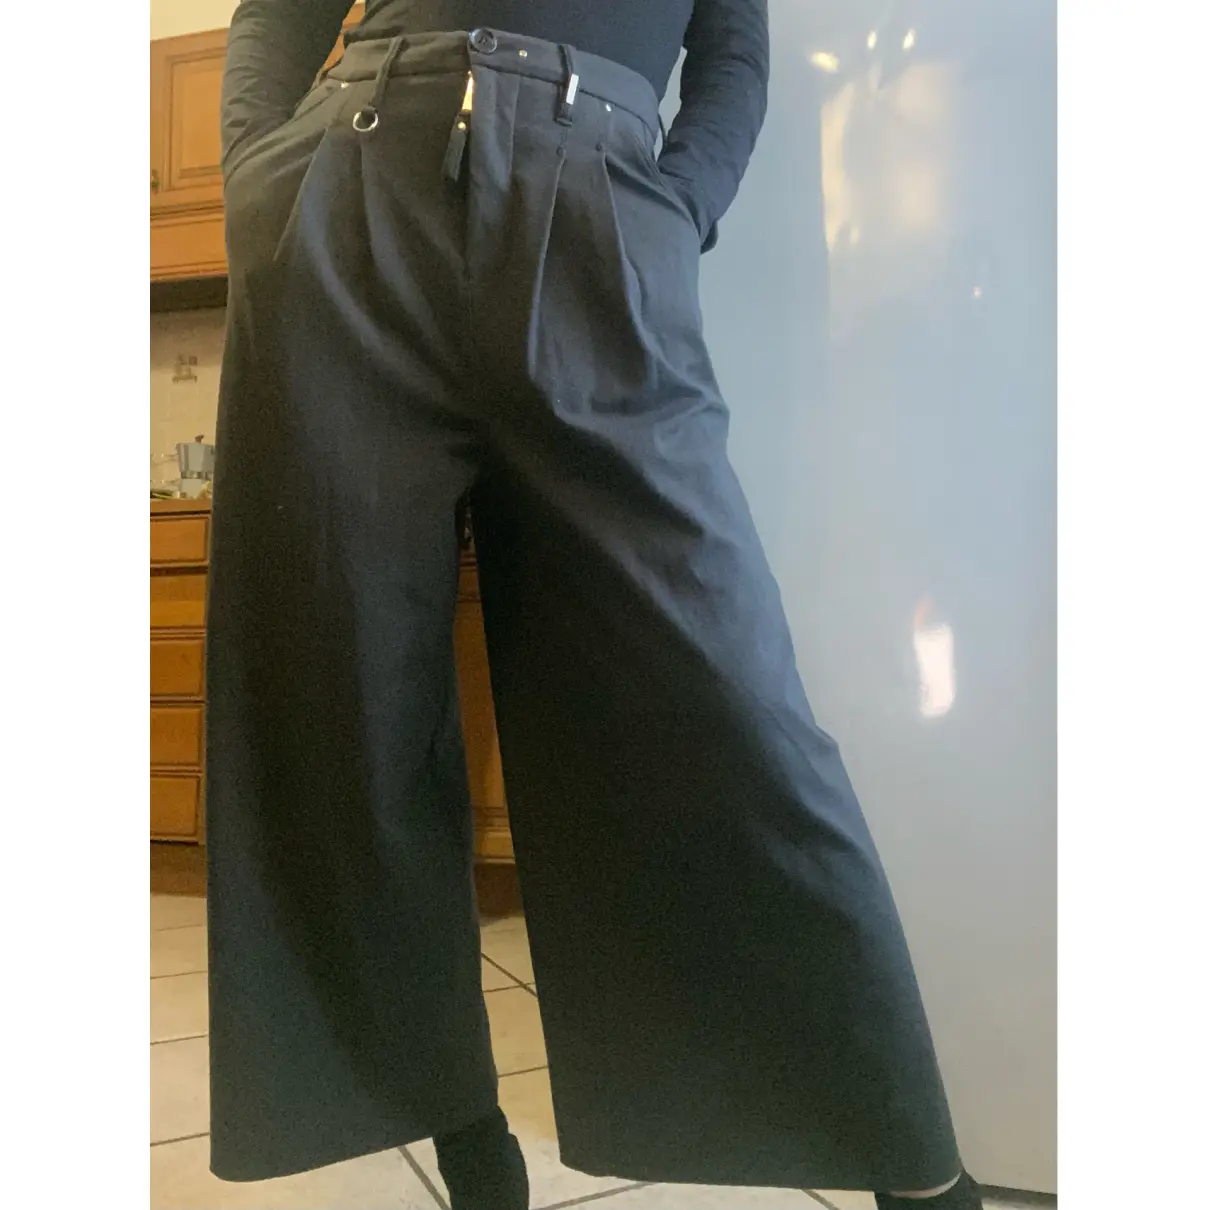 Large pants HIGH